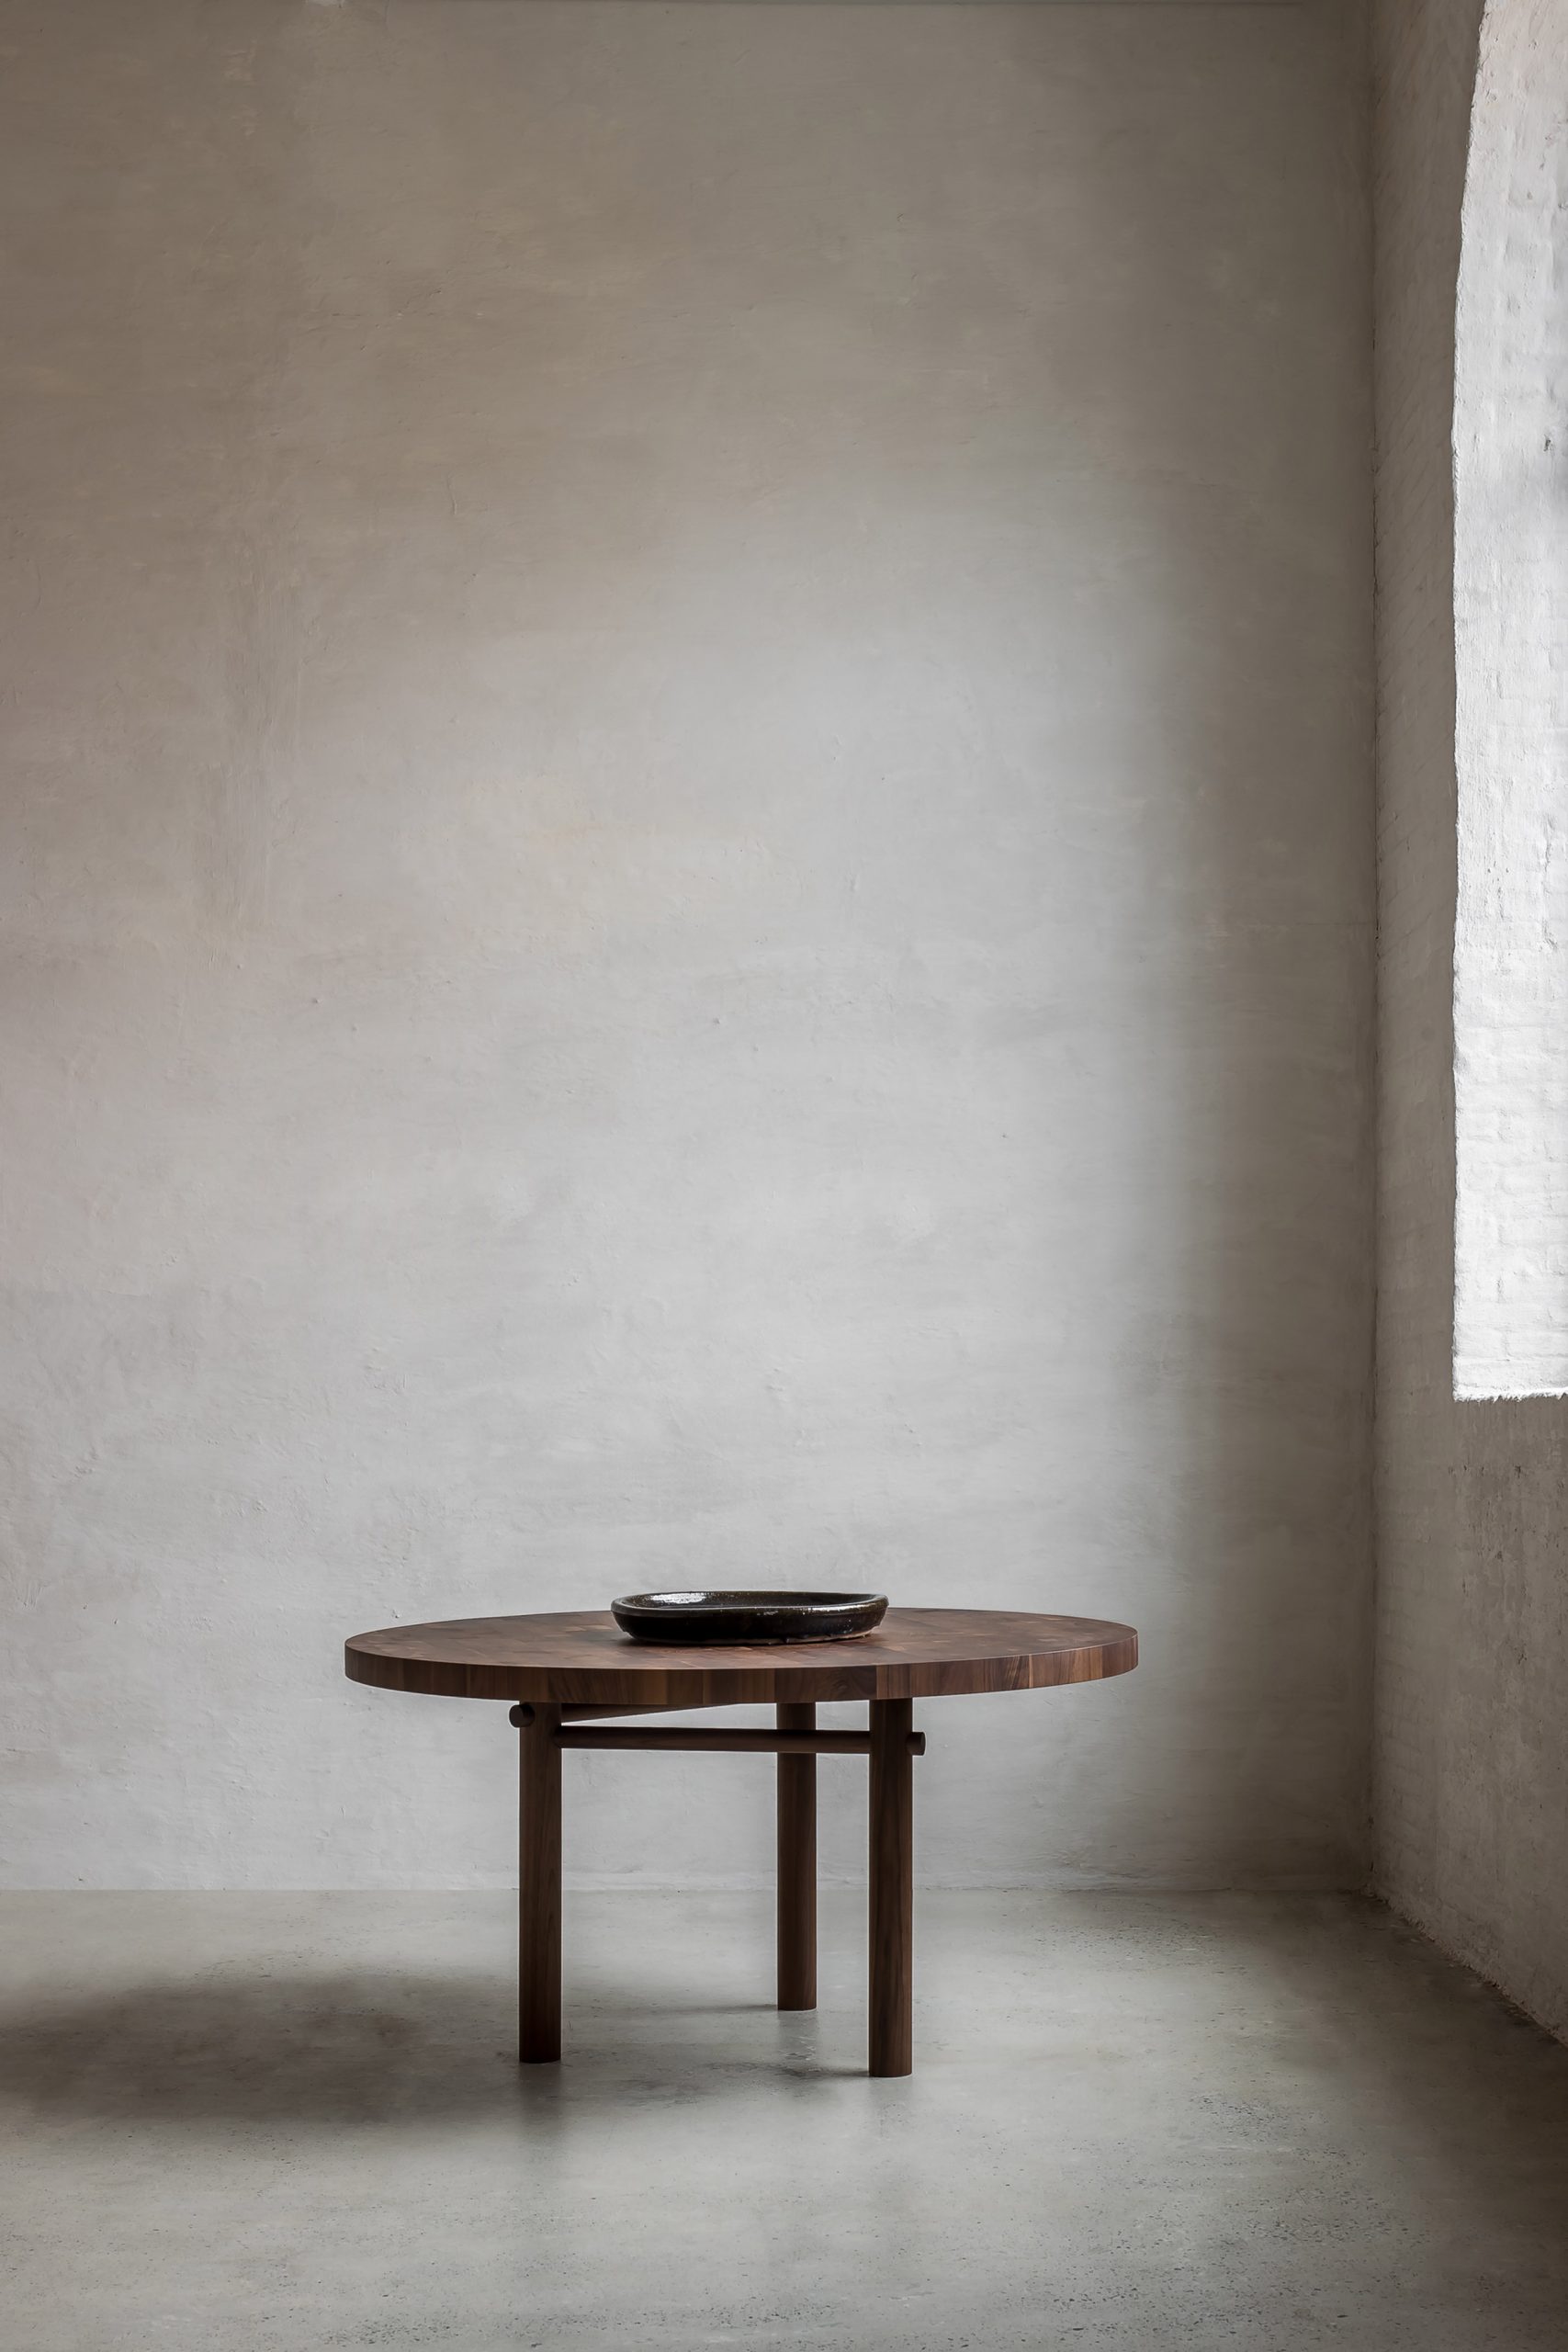 Round table in Nomad furniture by Nathalie Deboel